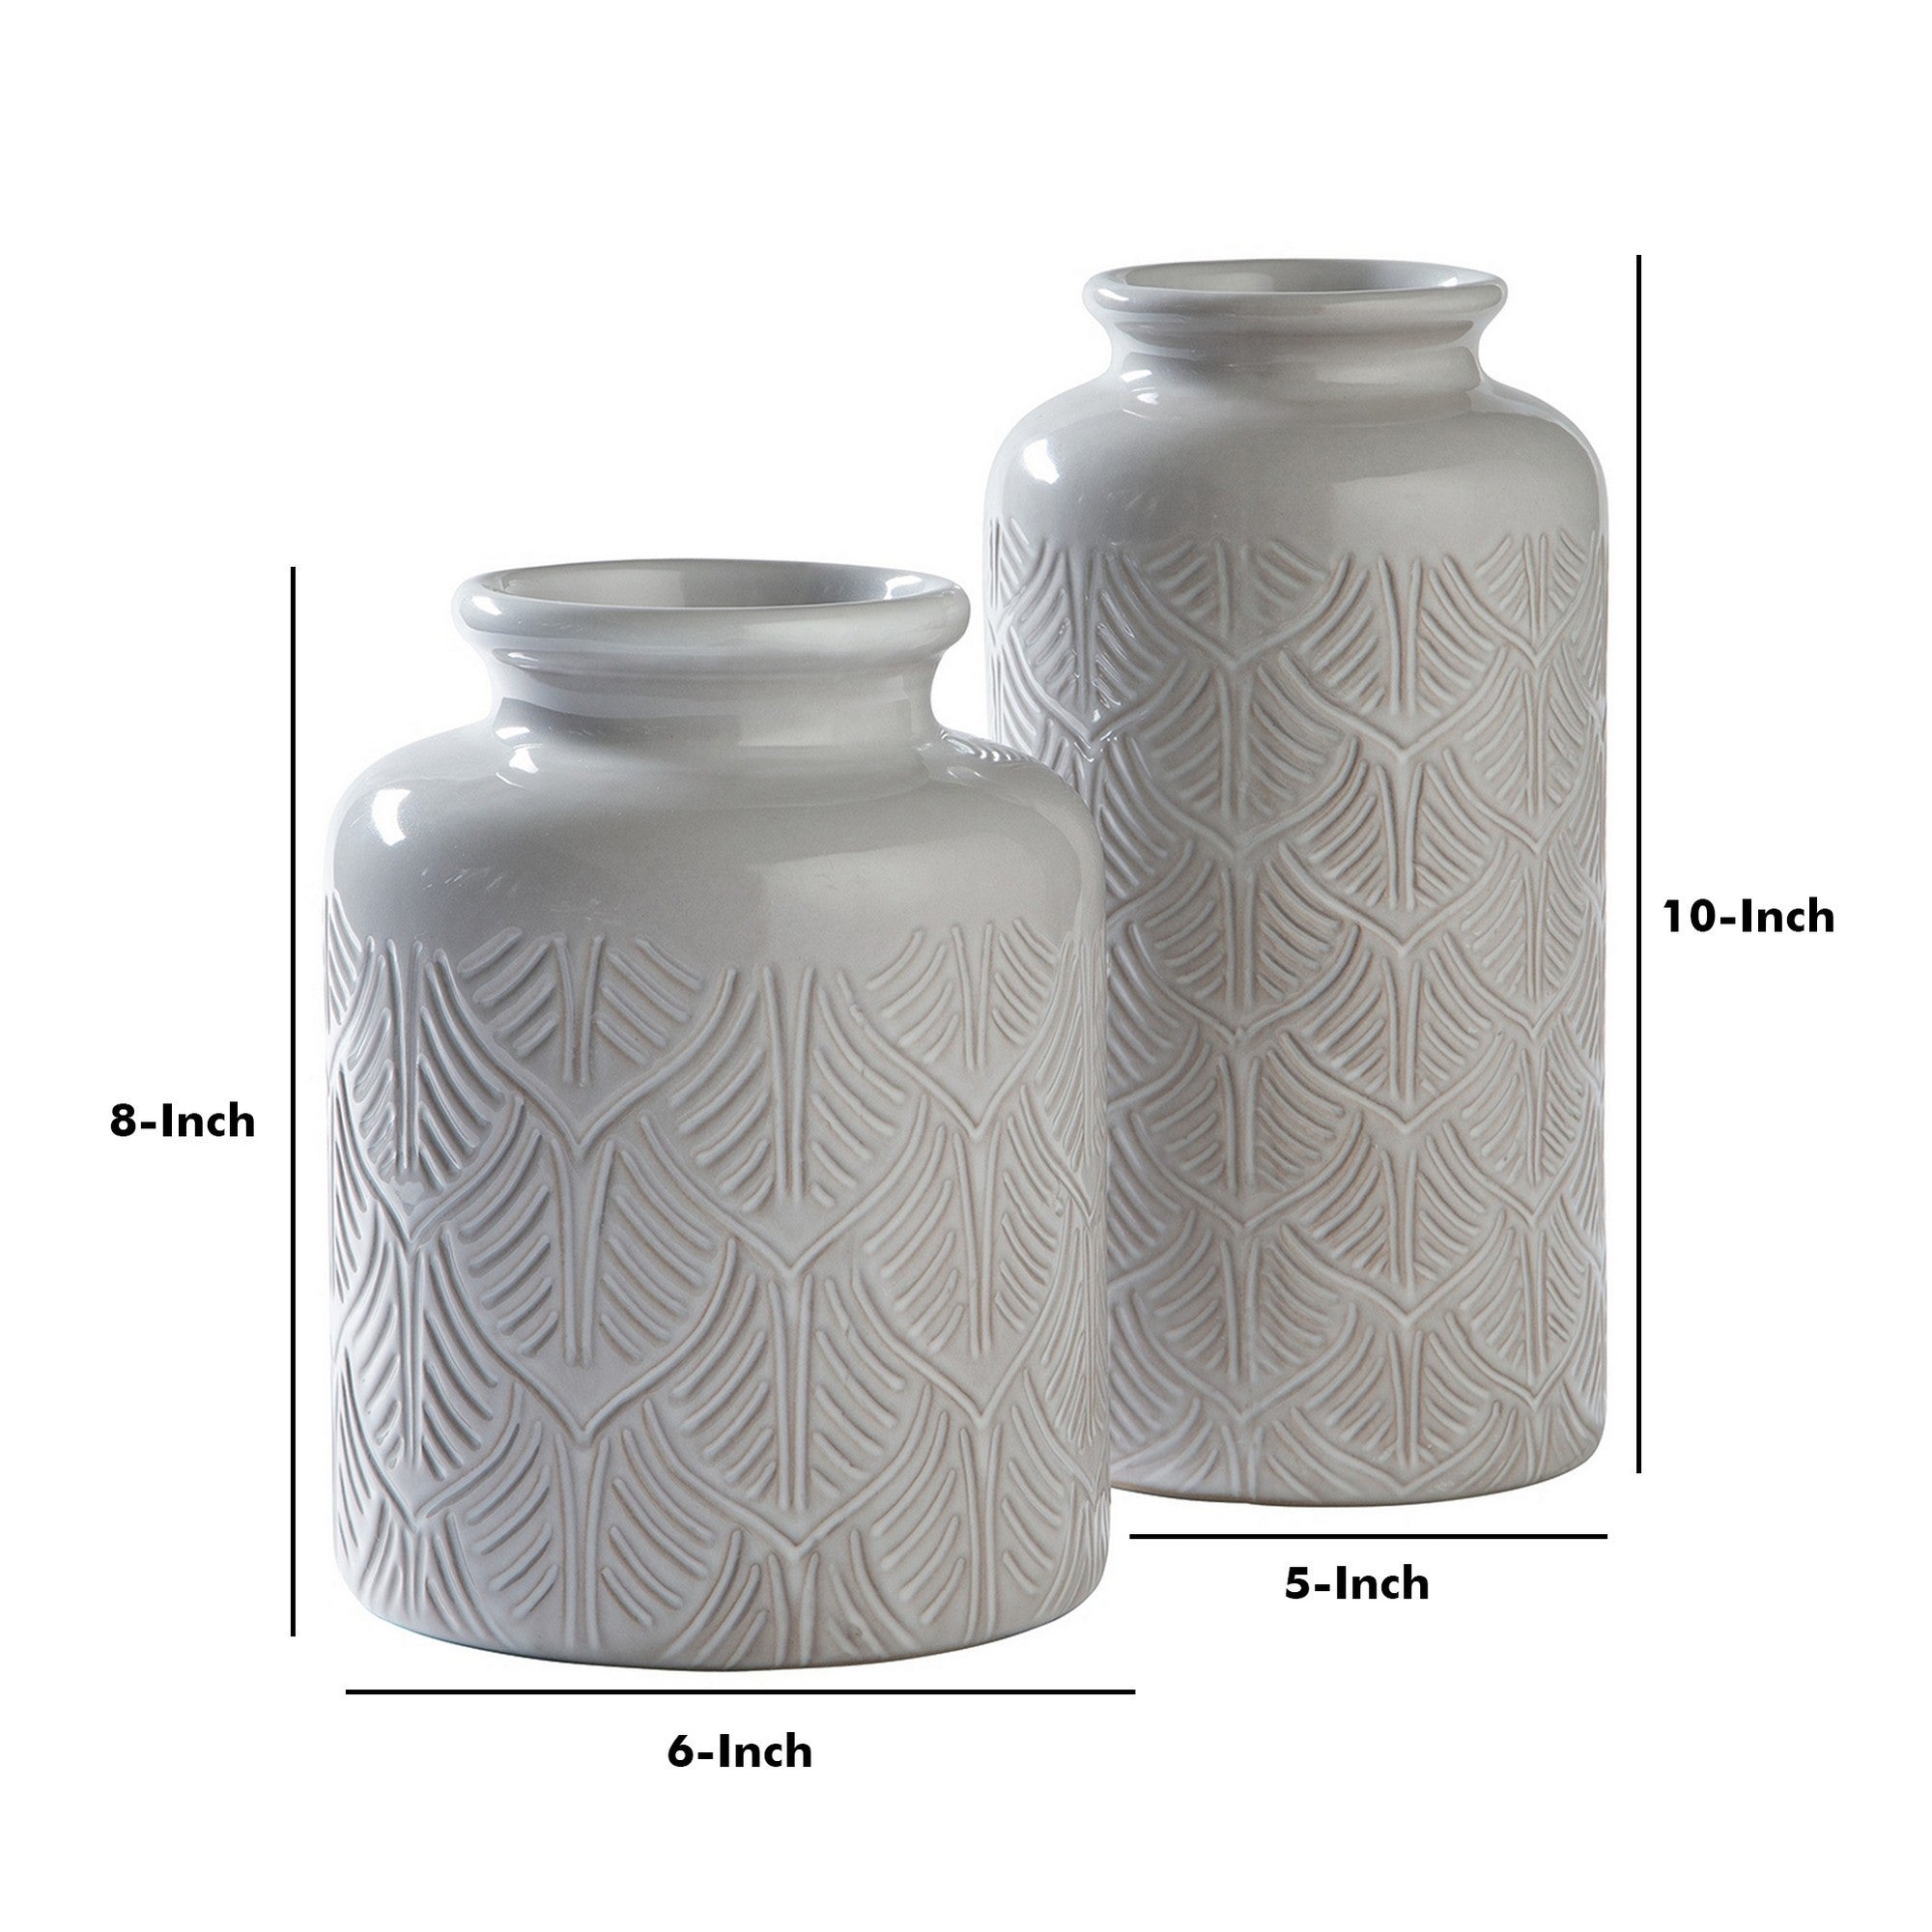 Vase with Ceramic Textured Leaf Pattern, Set of